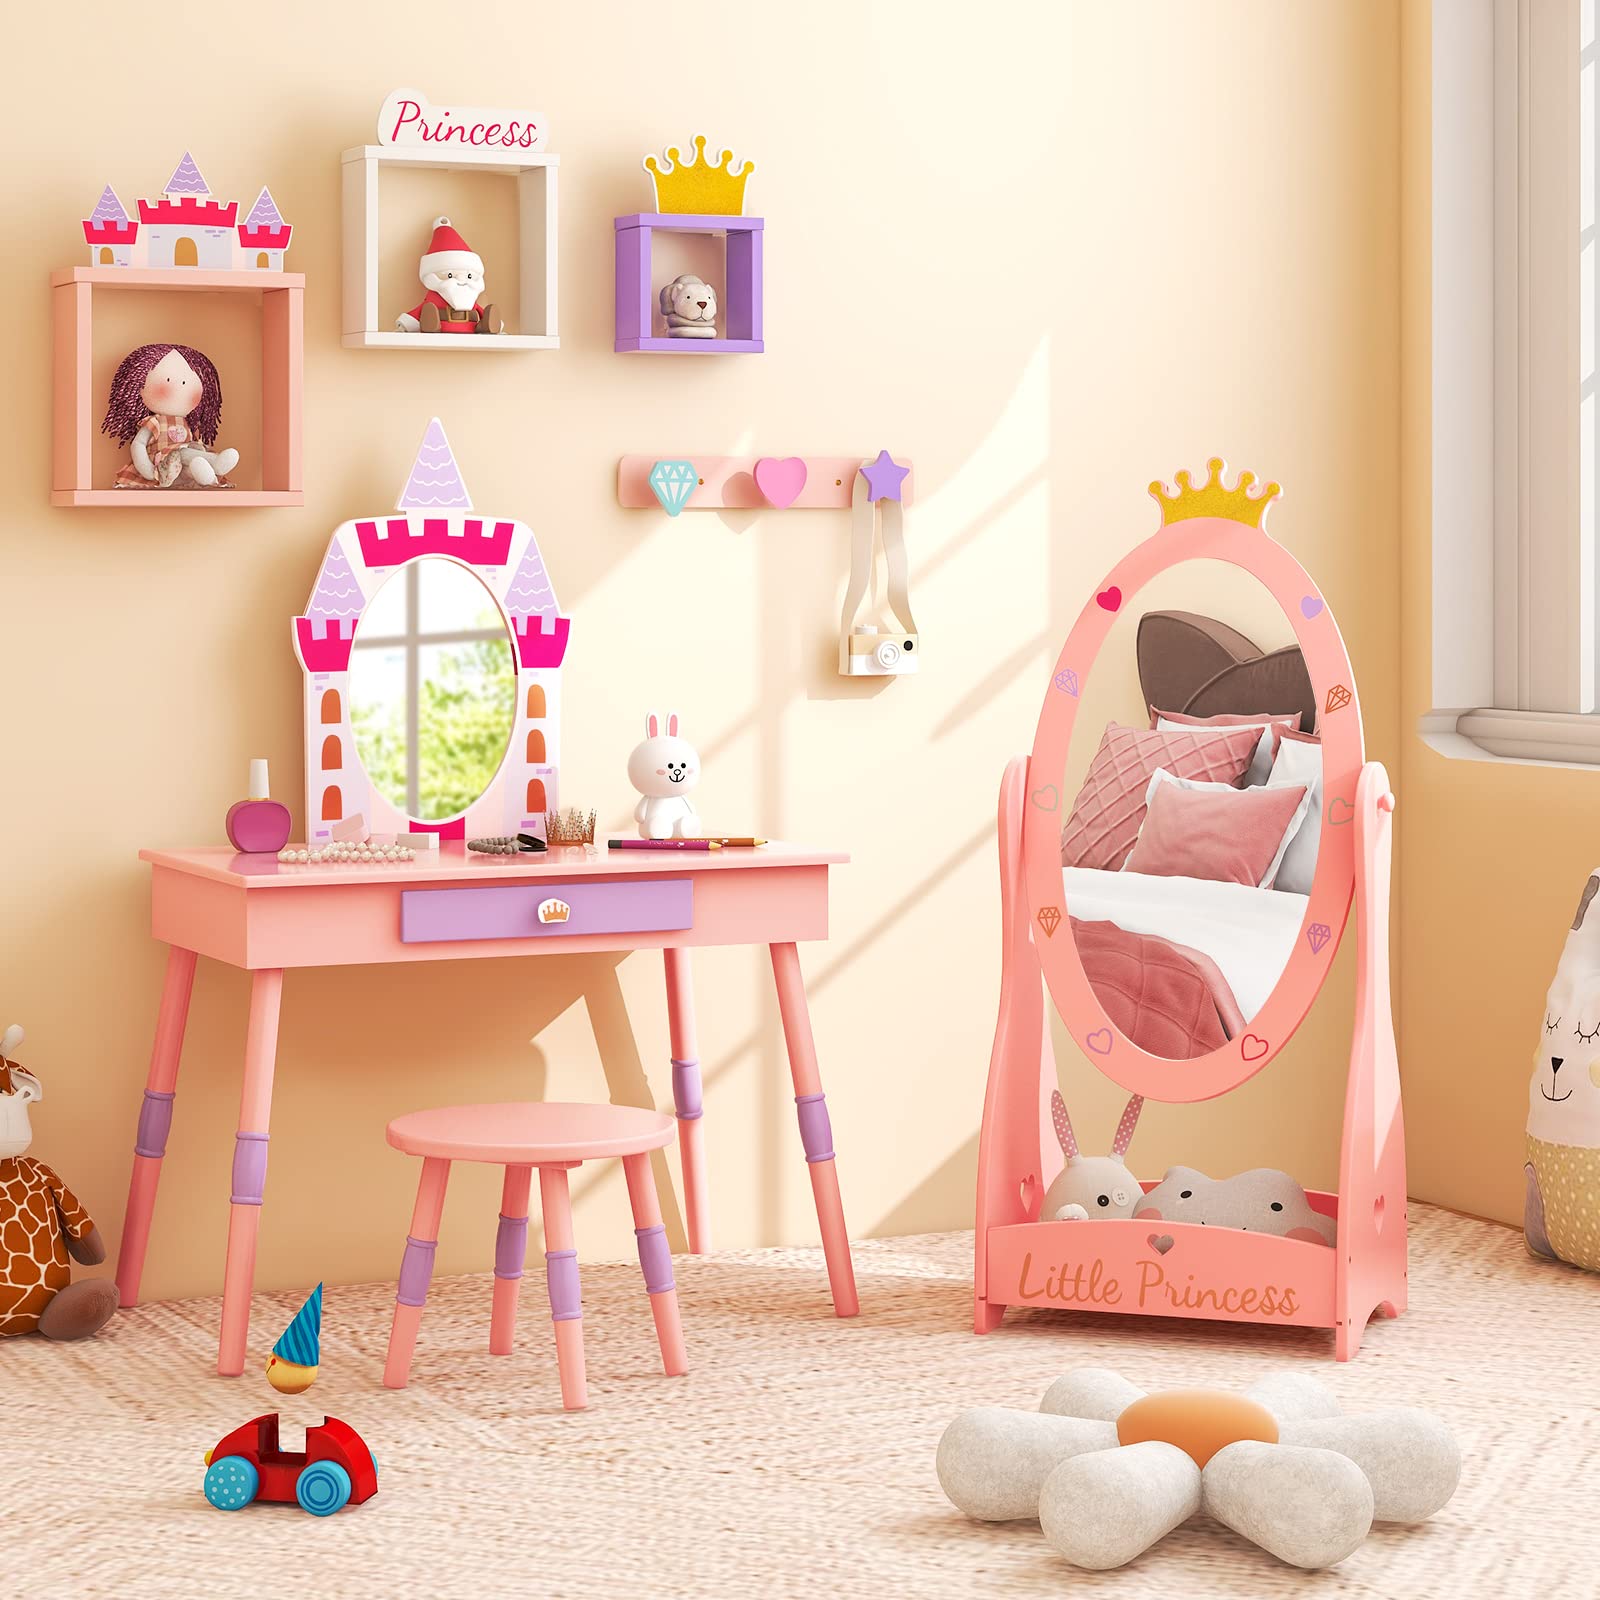 Costzon Kids Full Length Mirror, Princess Floor Free Standing Mirror